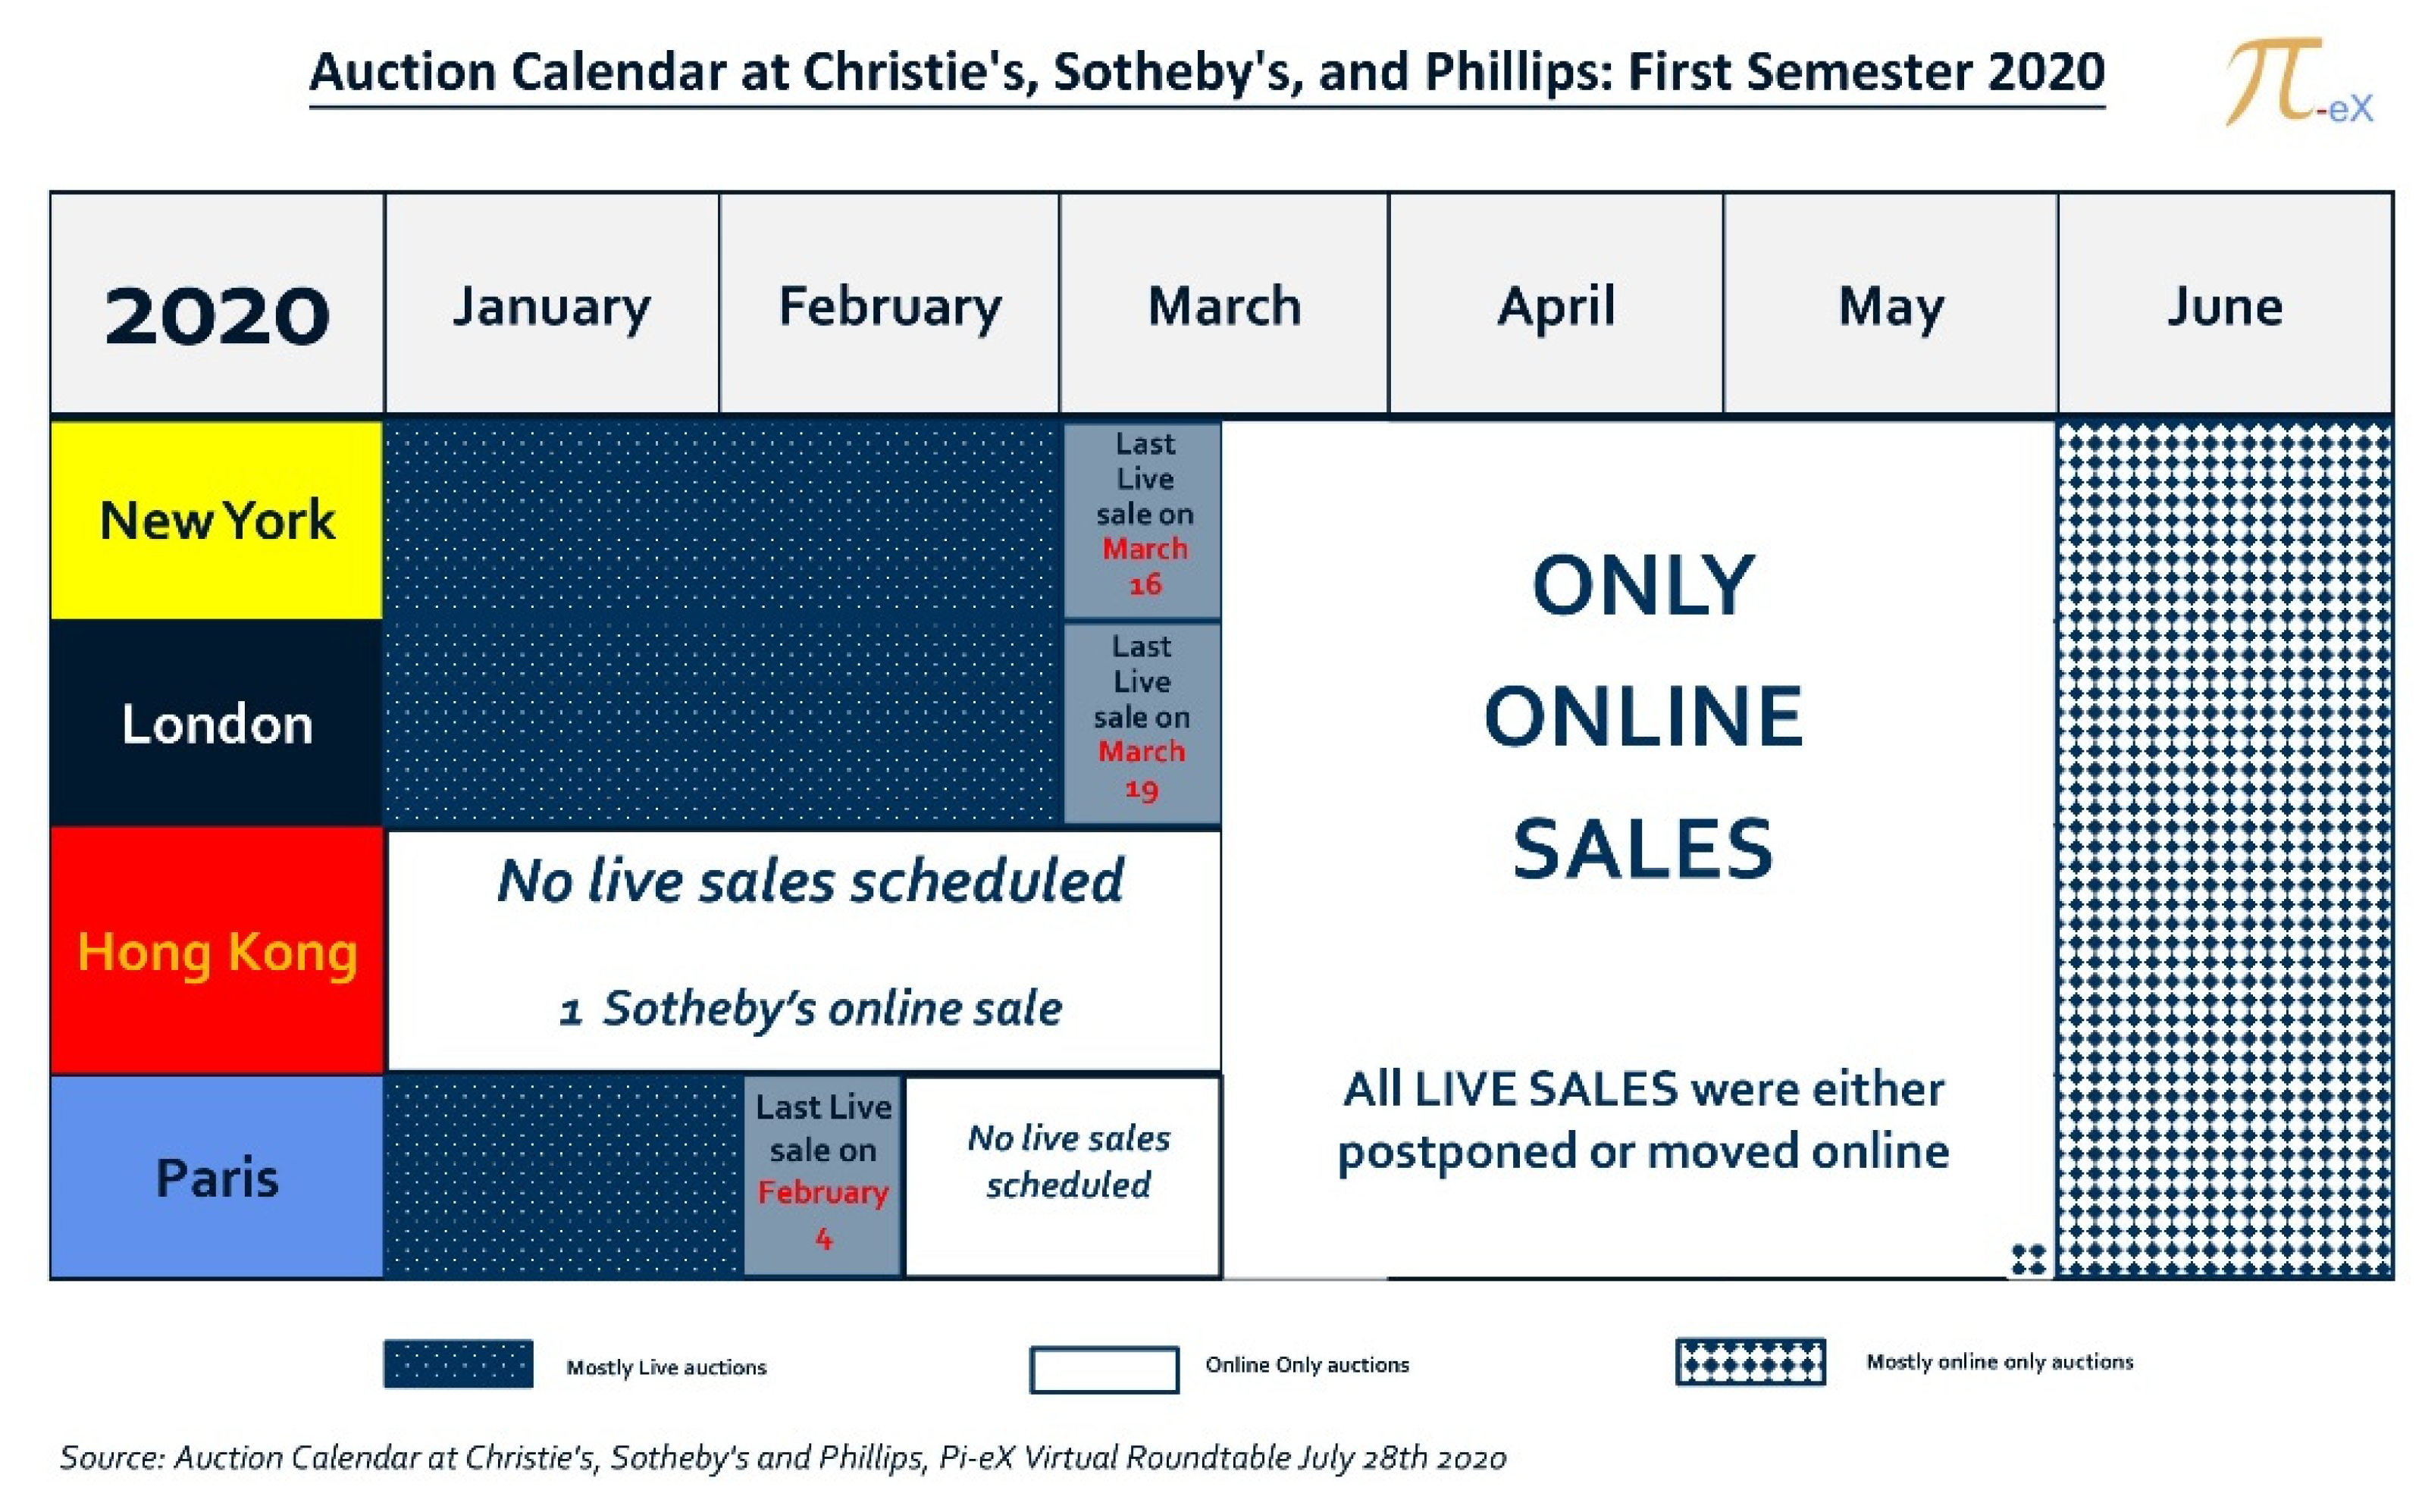 Introducing Sotheby's Buy Now Initiative - PurseBlog